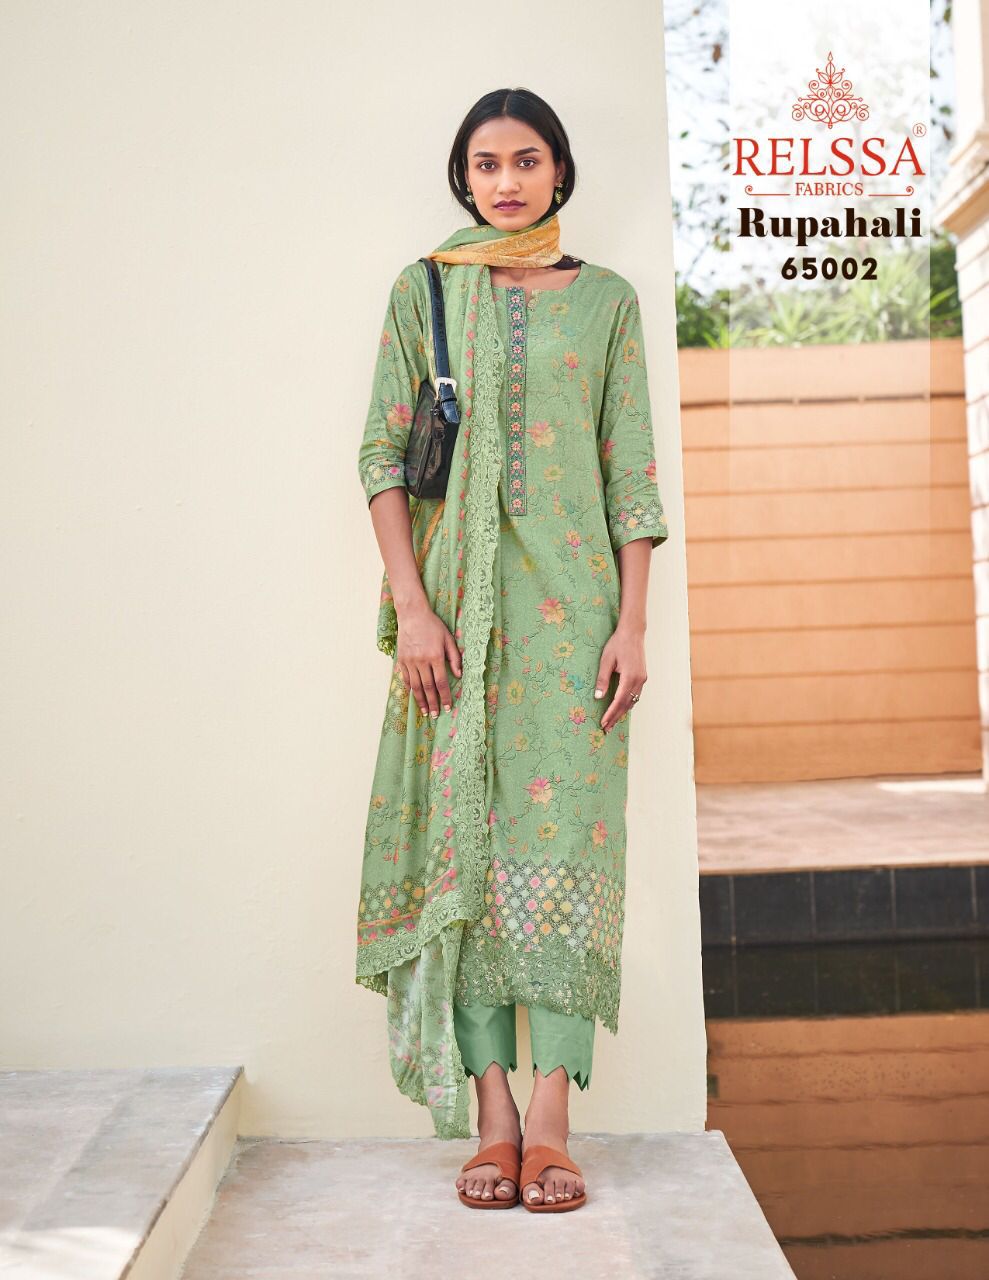 Relssa Fabrics Rupahali 65002